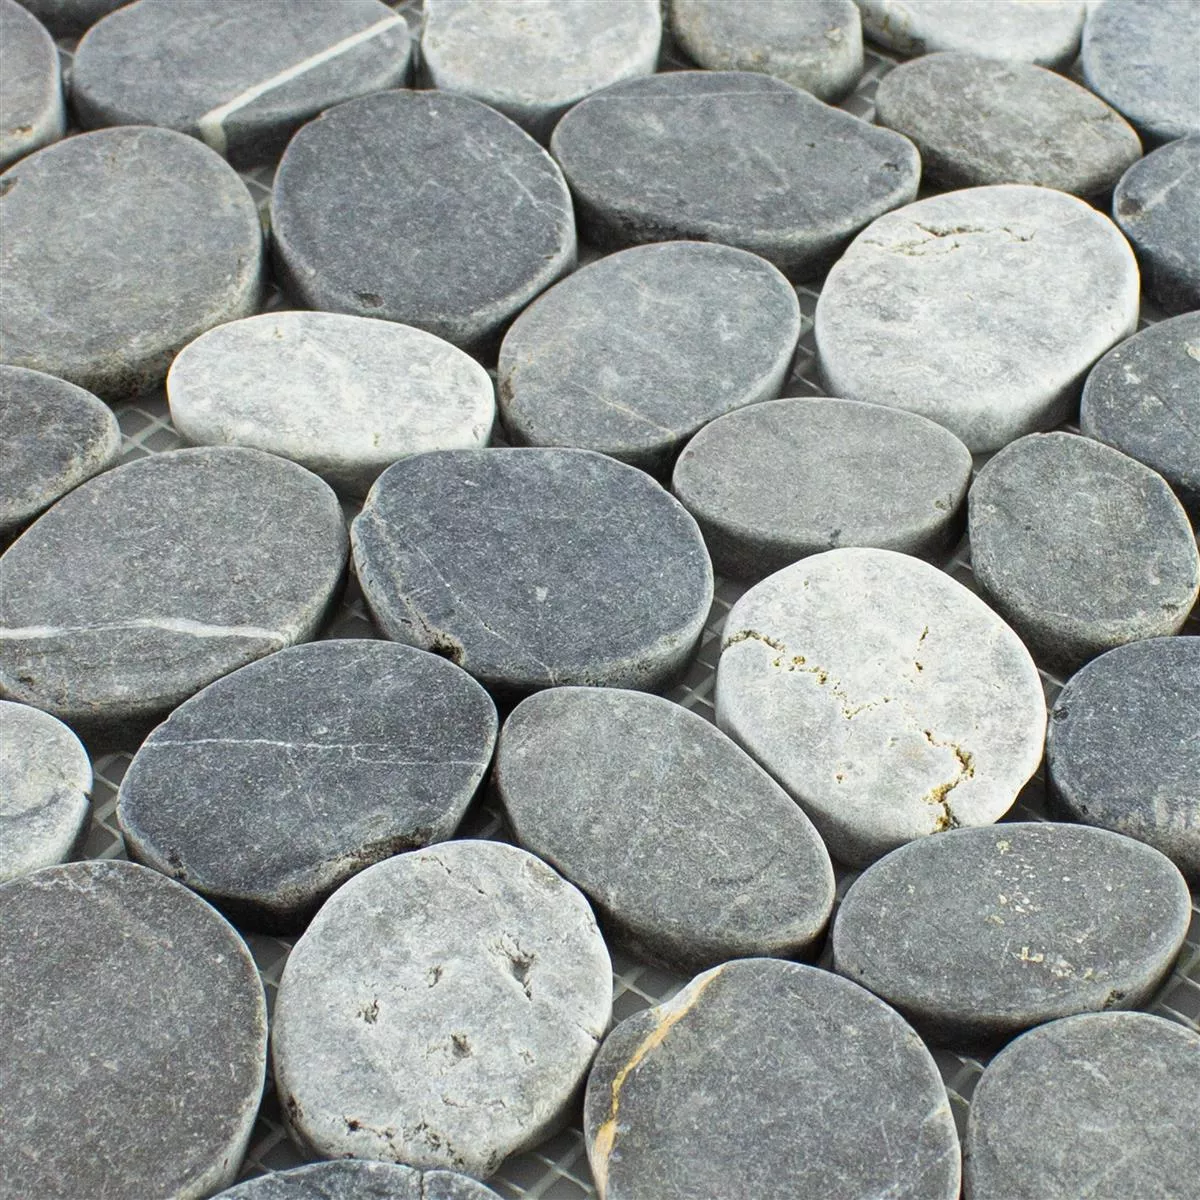 Pebble Mosaic Tiles Leoben Anthracite Grey